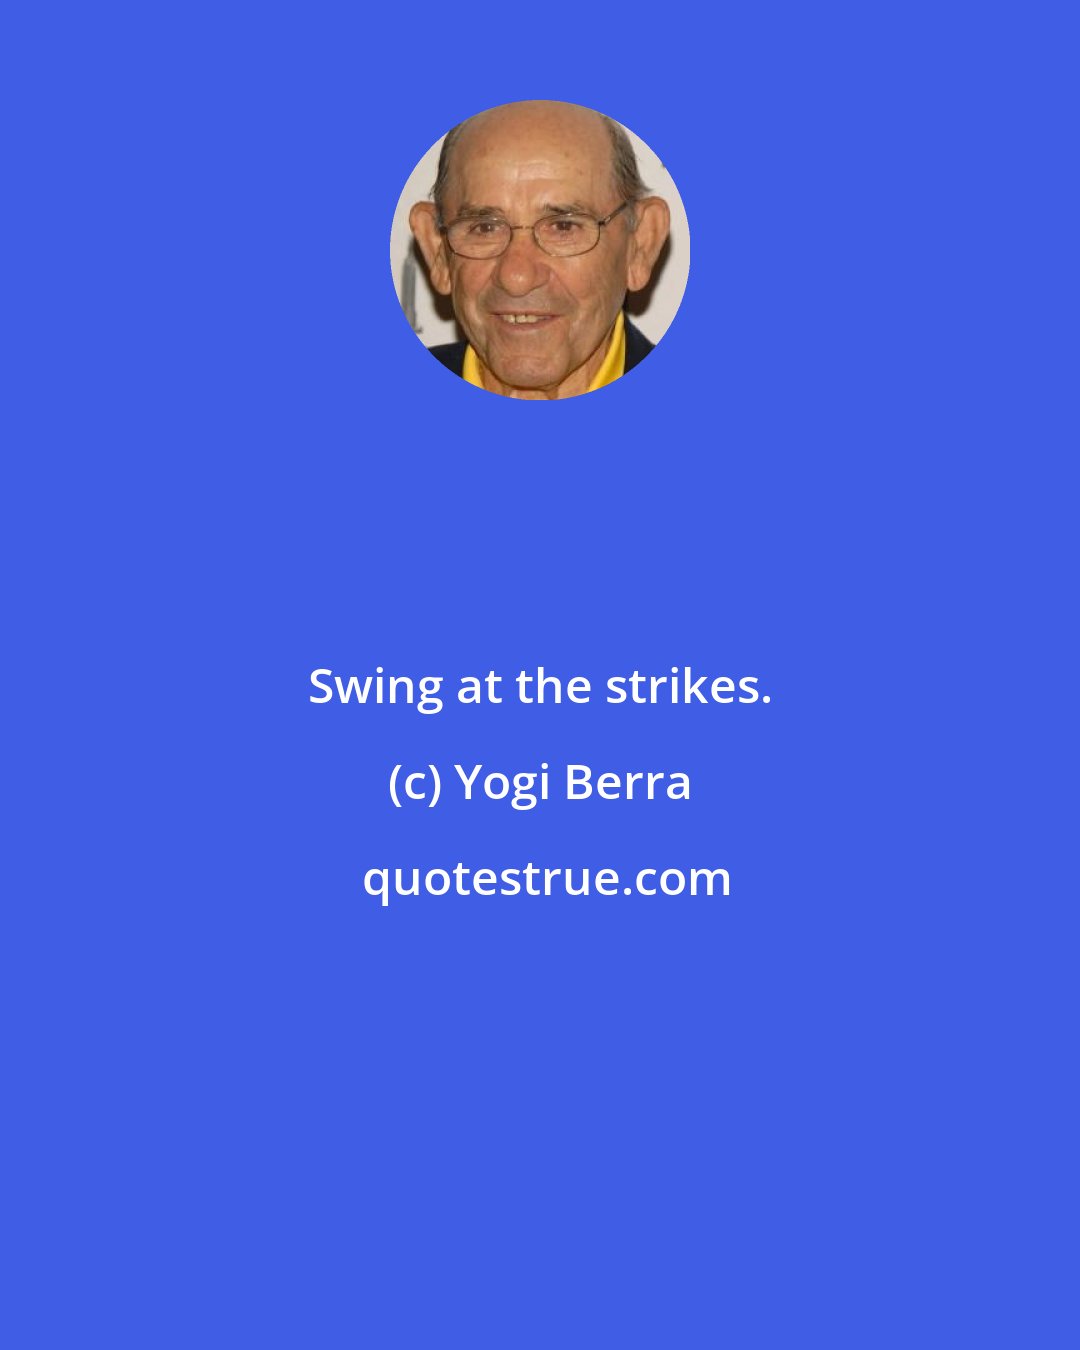 Yogi Berra: Swing at the strikes.